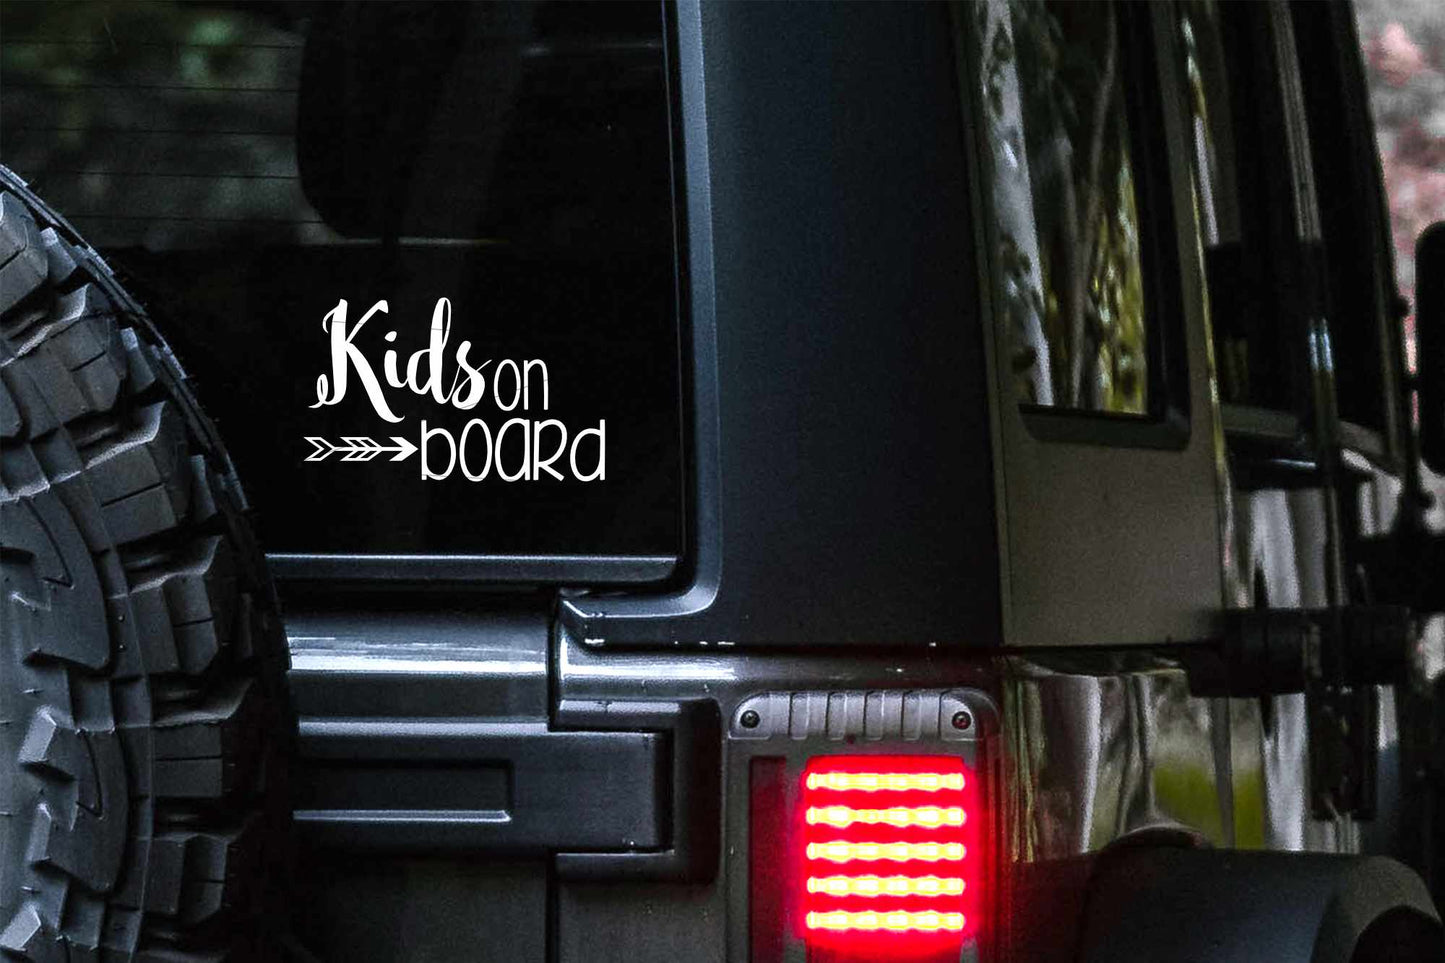 Kids on board Car Decal | Safety Bumper Sticker